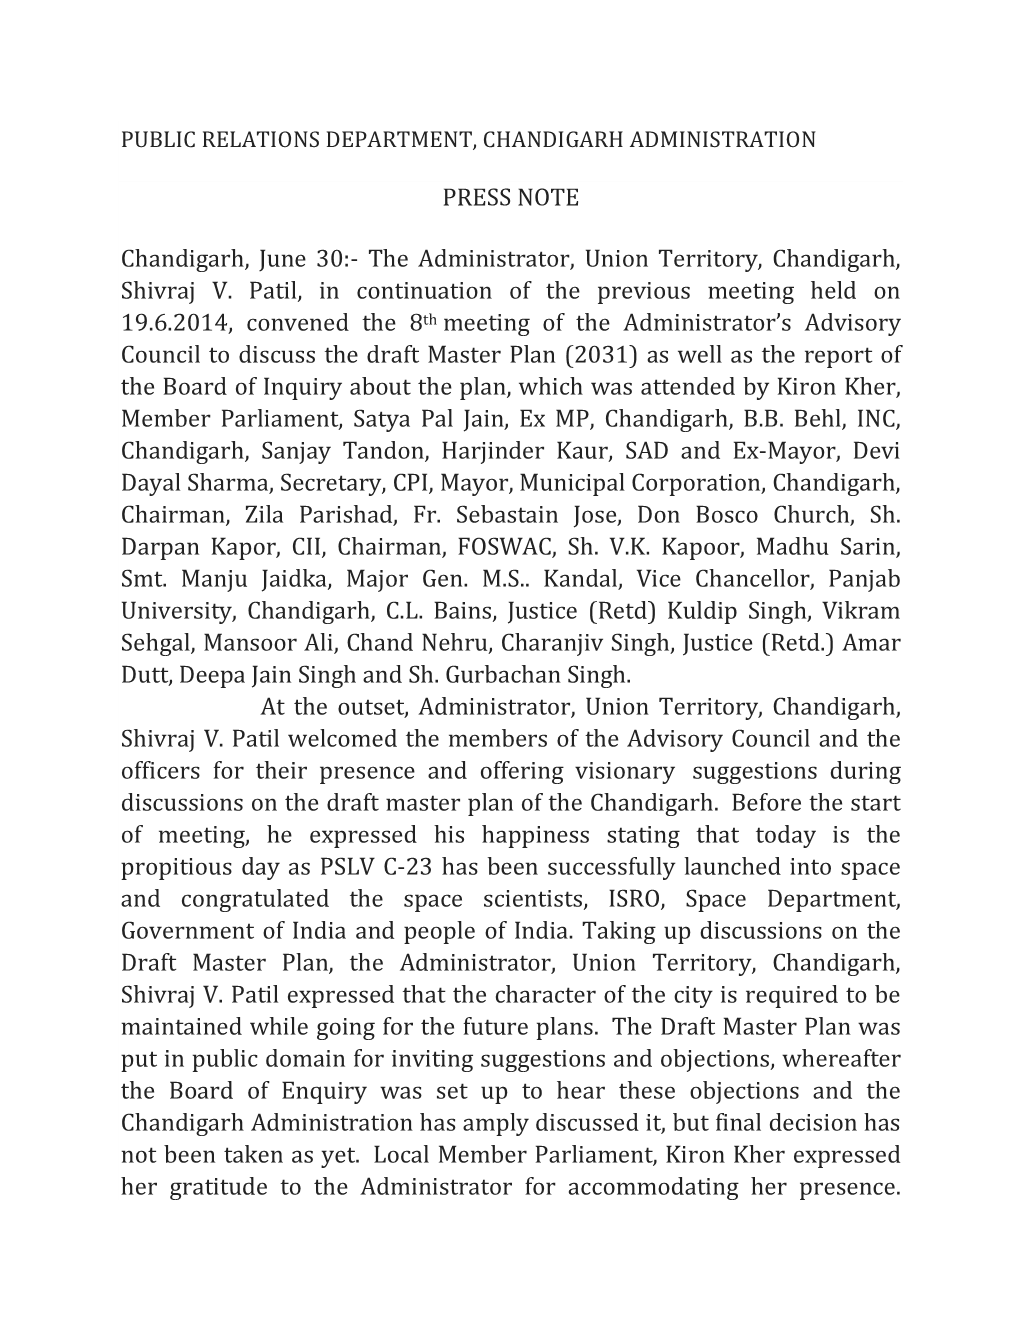 PRESS NOTE Chandigarh, June 30:- the Administrator, Union Territory